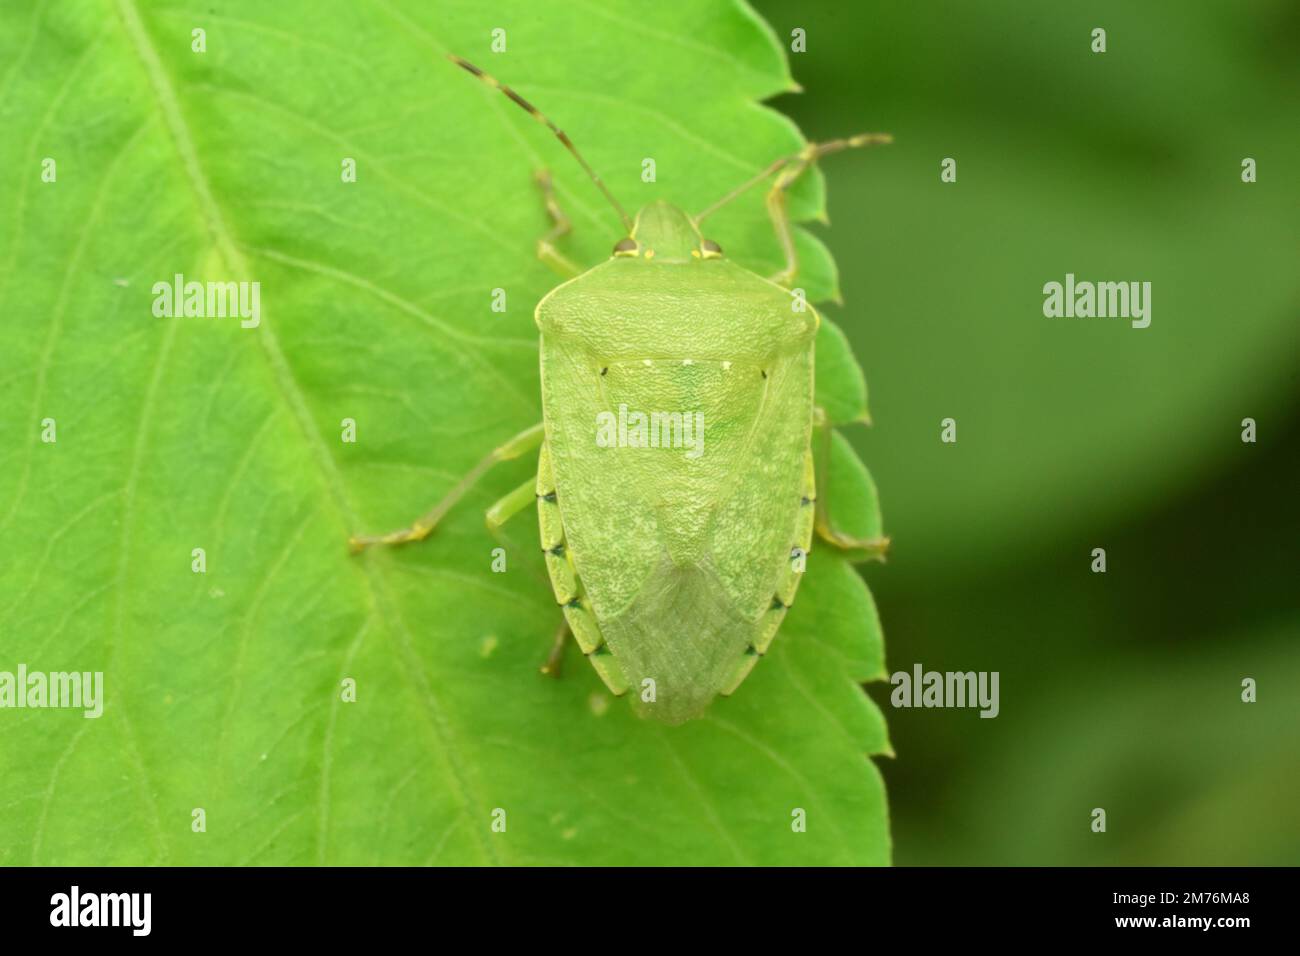 Southern green stink bug crawling on green leaf. Java Indonesia. Nezara viridula. Stock Photo